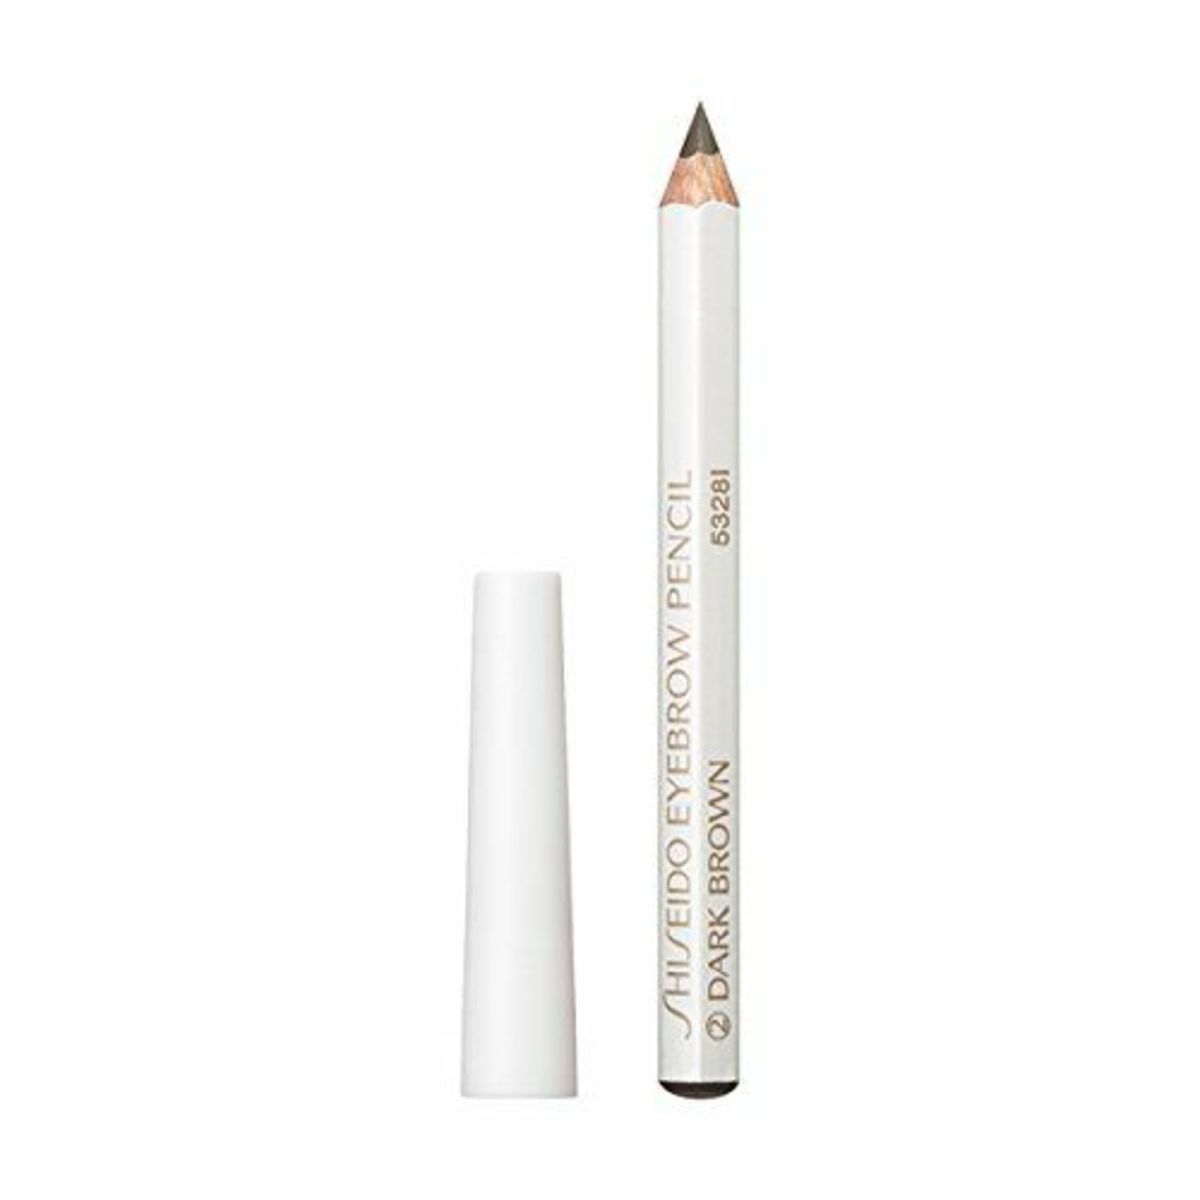 Eyebrow Pencil 1.2g #02 - Dark Brown [Parallel Import]